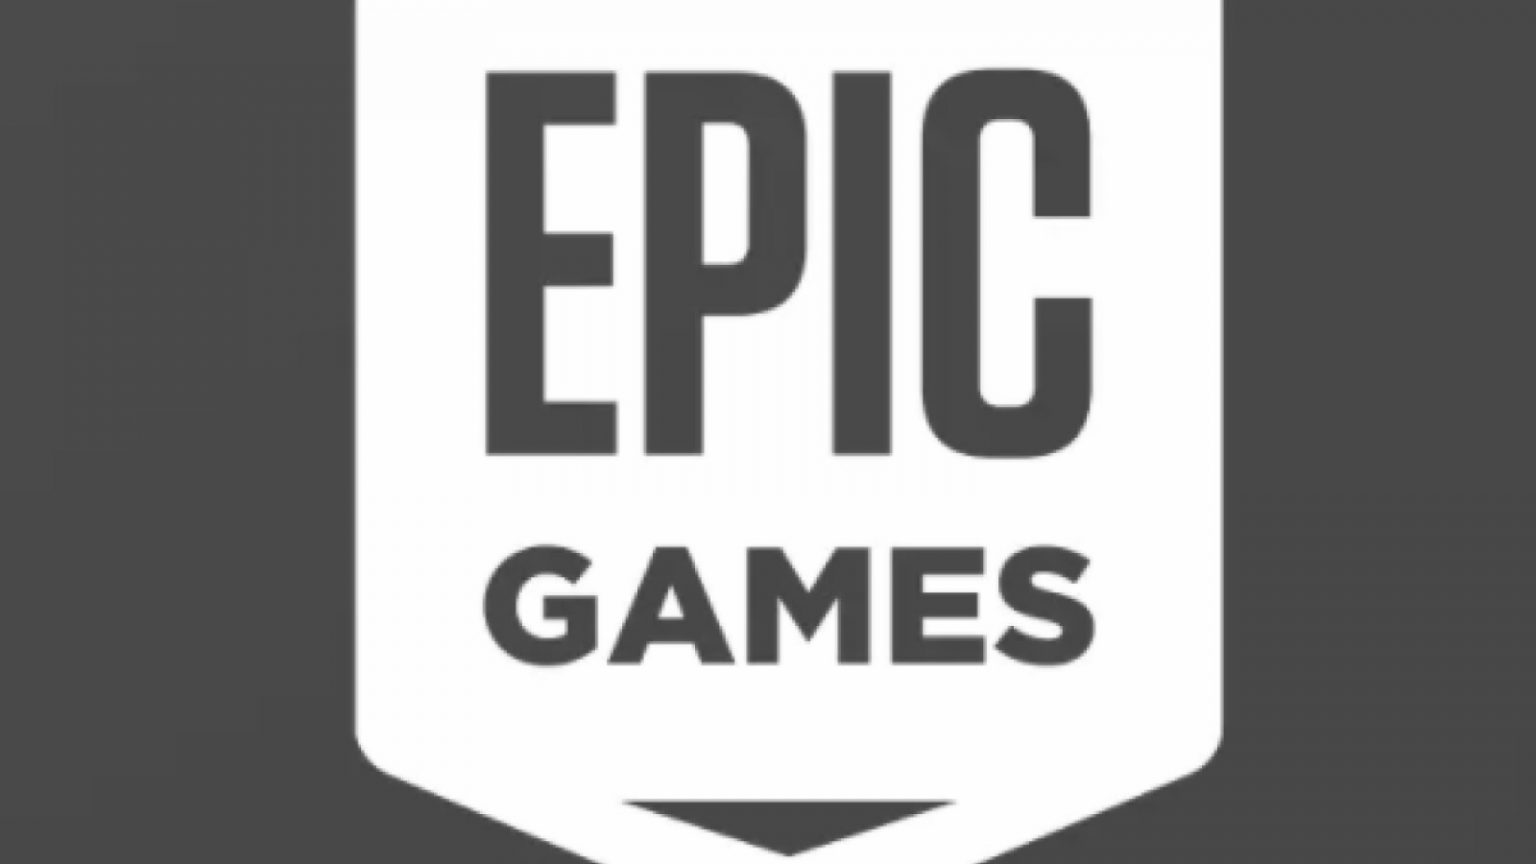 Free PC Games Epic games offer stellar adventure